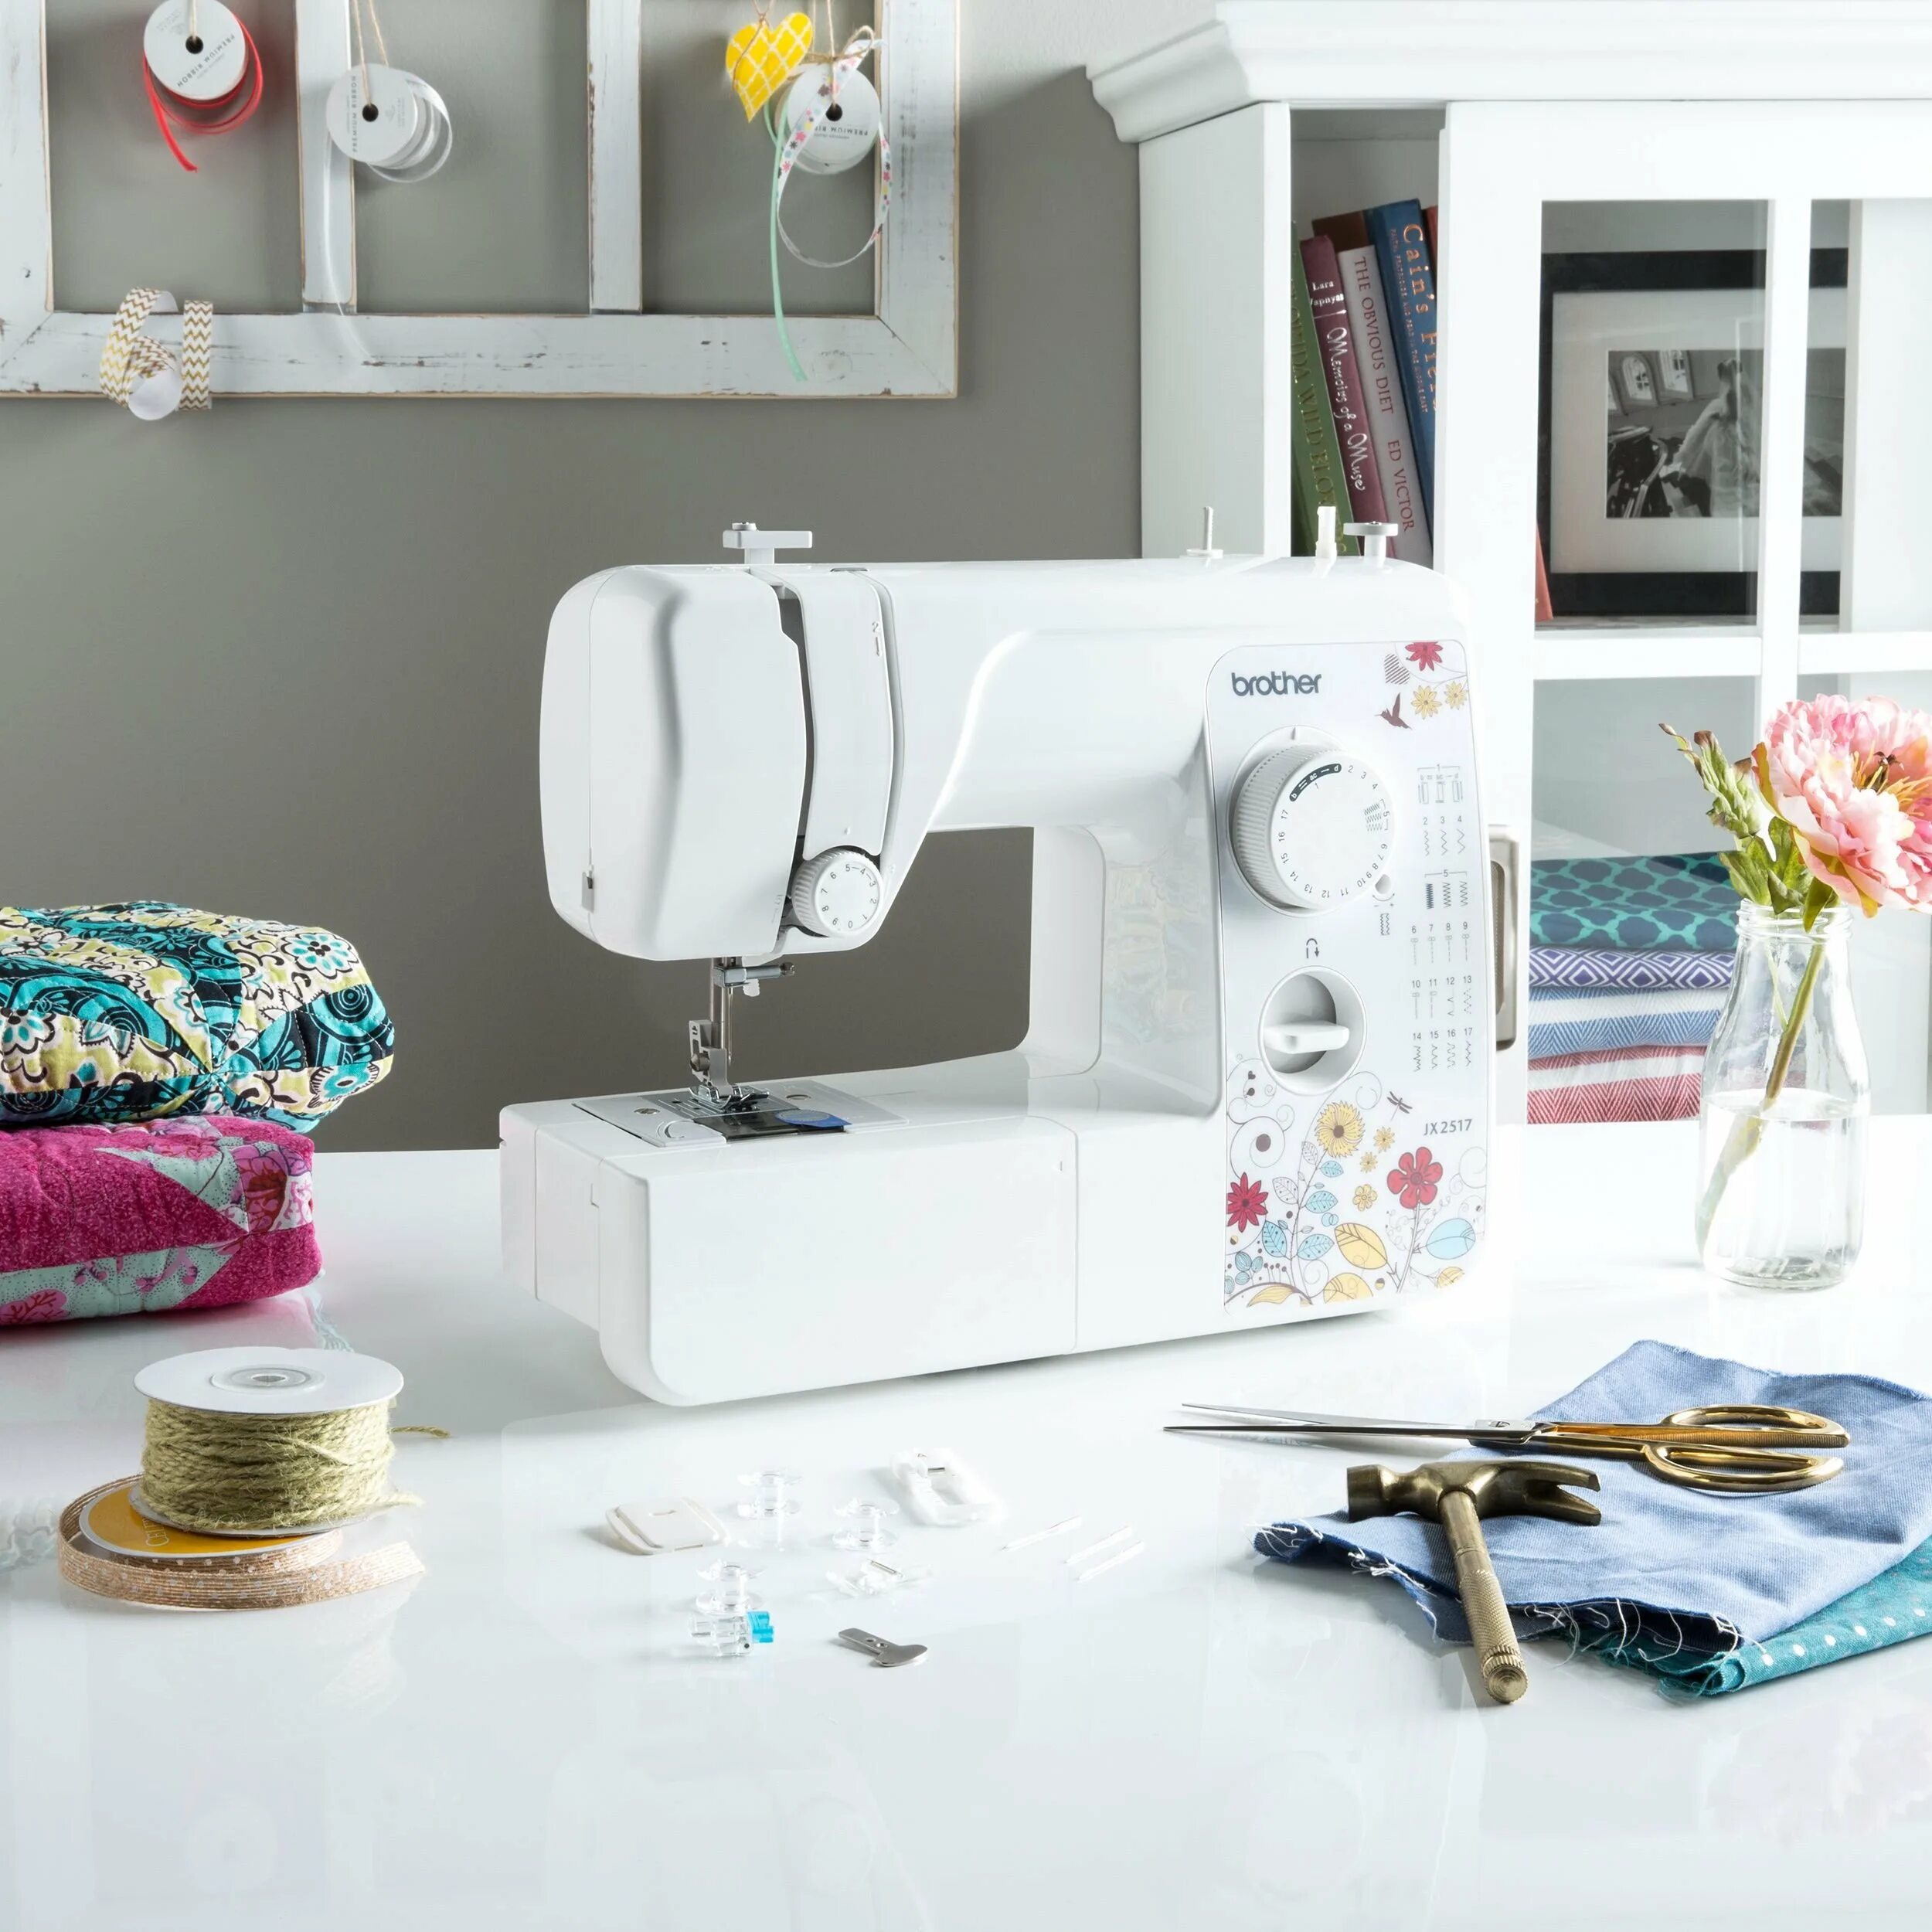 Швейная машина Sew & Sew. Easy Stitch швейная машинка. Швейная машинка Фэмили. Швейная машина homestore hs893.